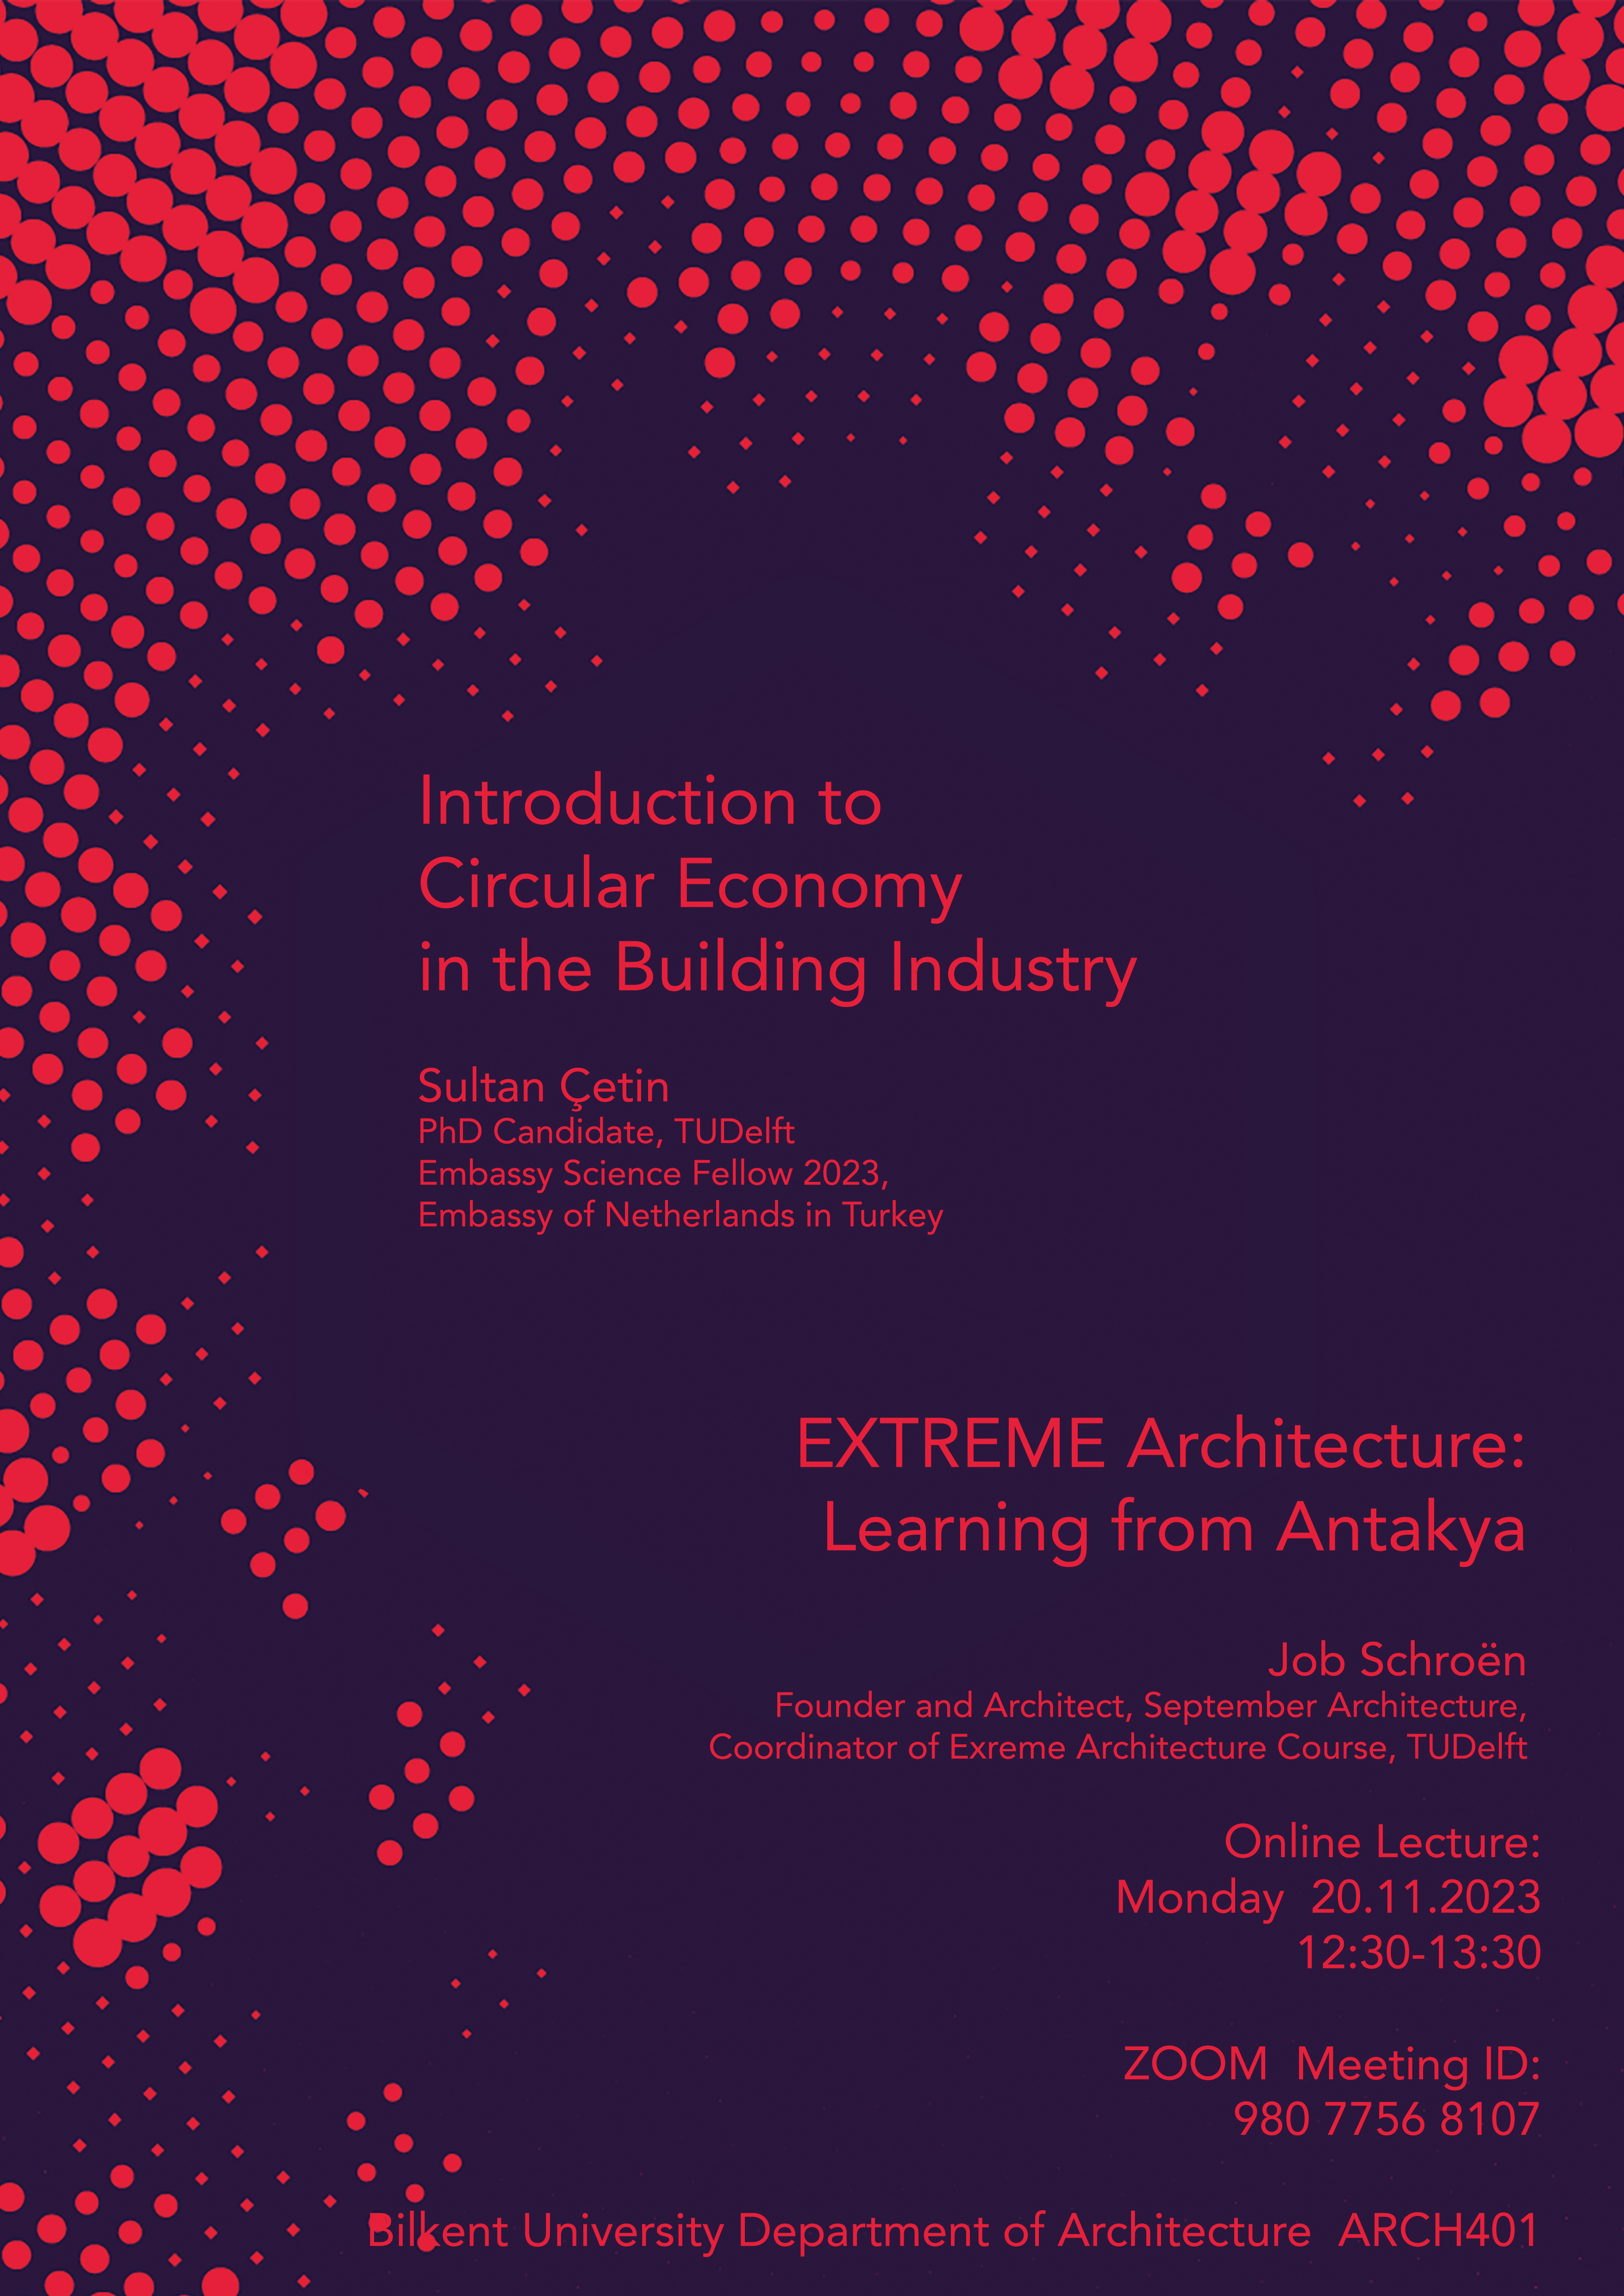 Circular Economy & Extreme Architecture